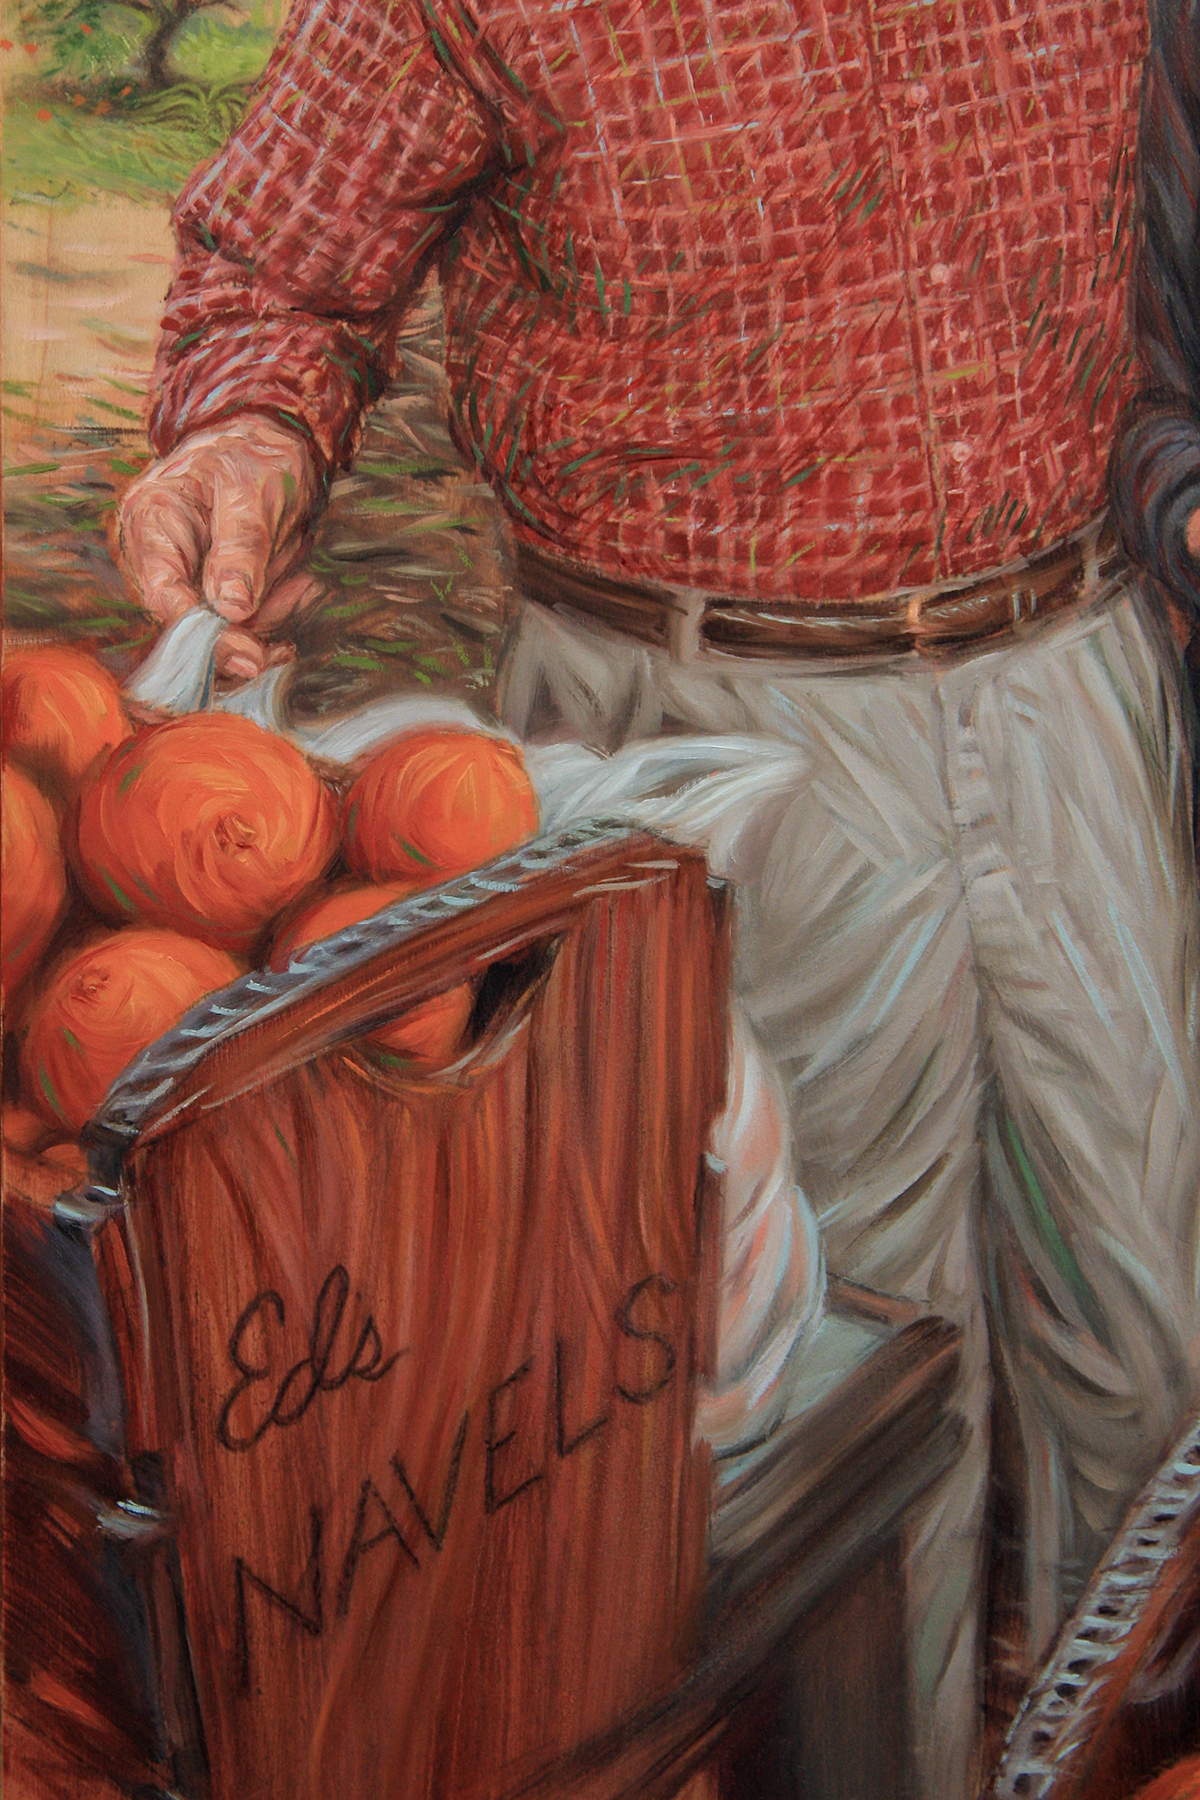 portraits Oil Painting heirloom man woman dog Live oak tree oranges